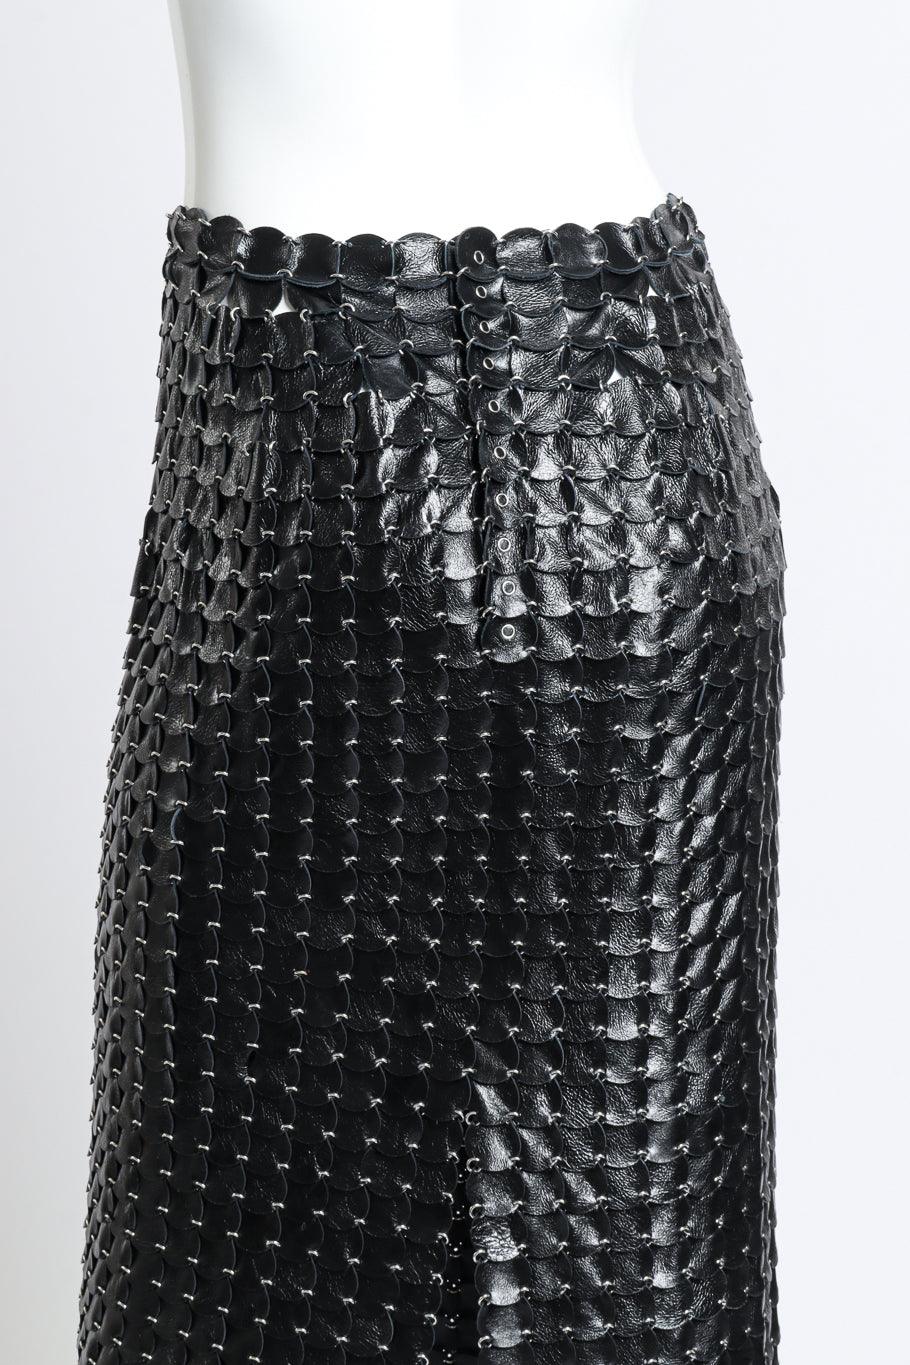 Paco Rabanne 2020 F/W Skirt back detail mannequin @RECESS LA